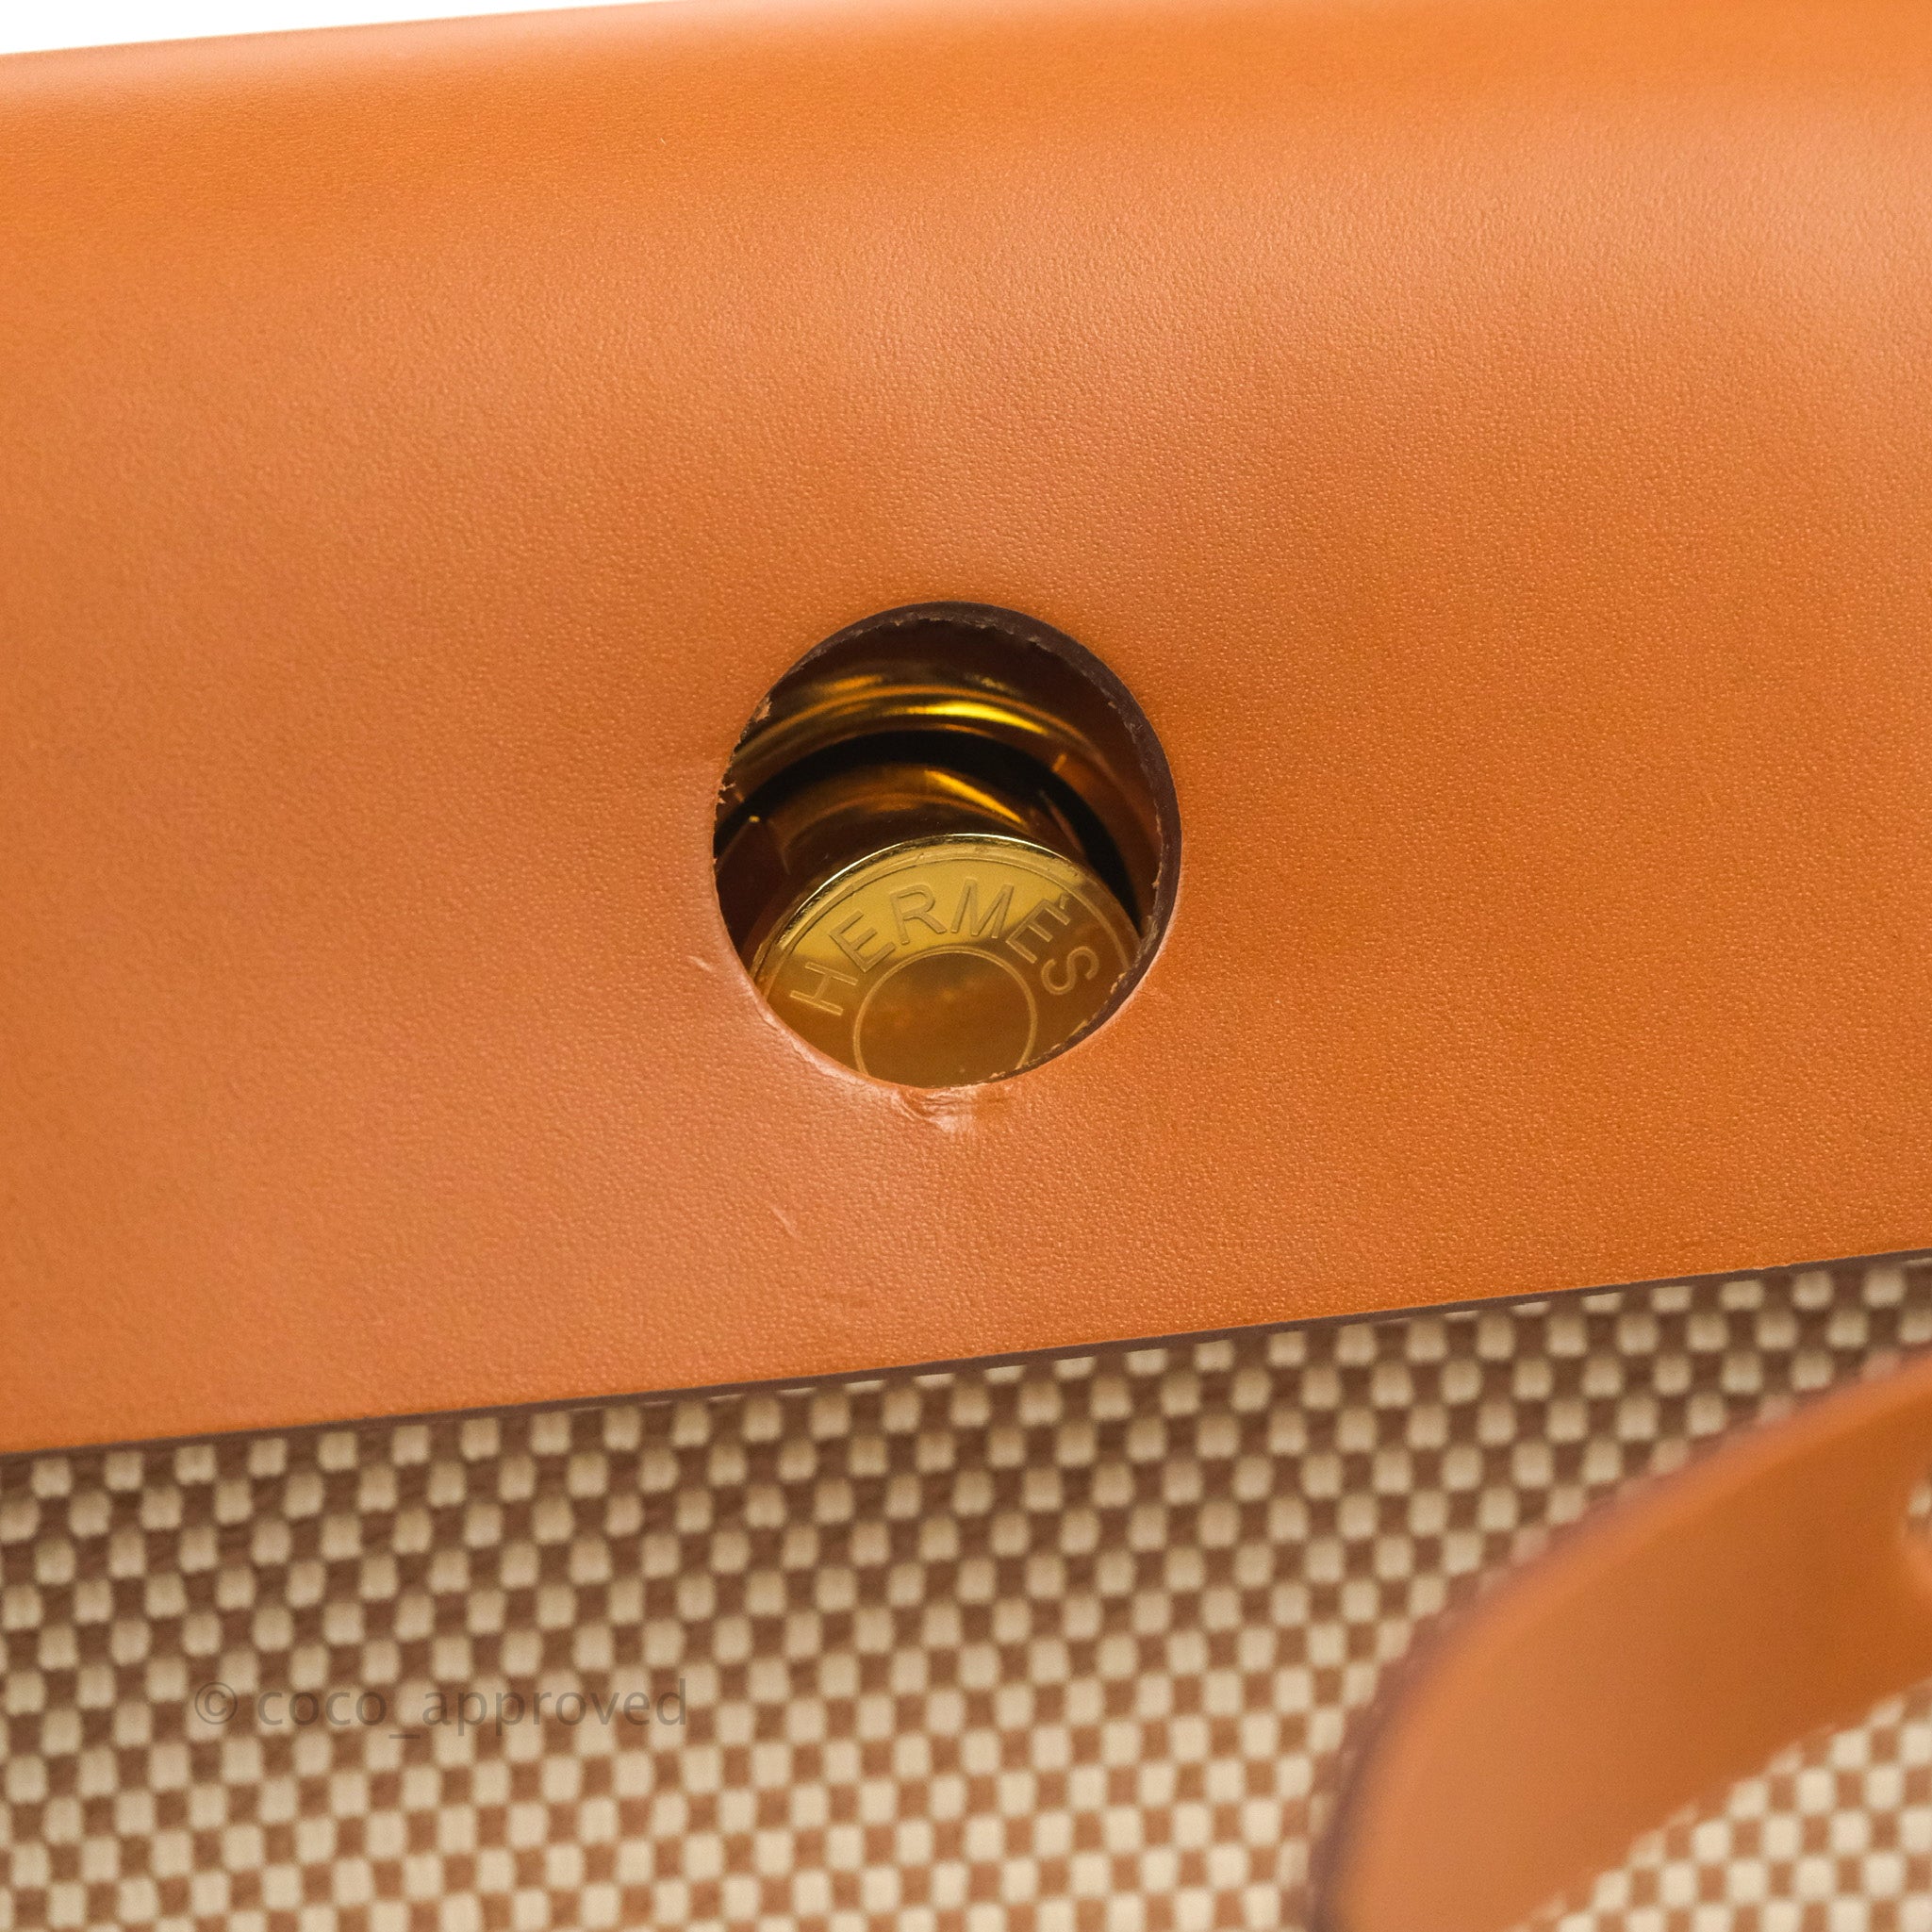 Hermès Herbag Zip Retourne 31 Chai/Fauve Canvas Gold Hardware – Coco  Approved Studio